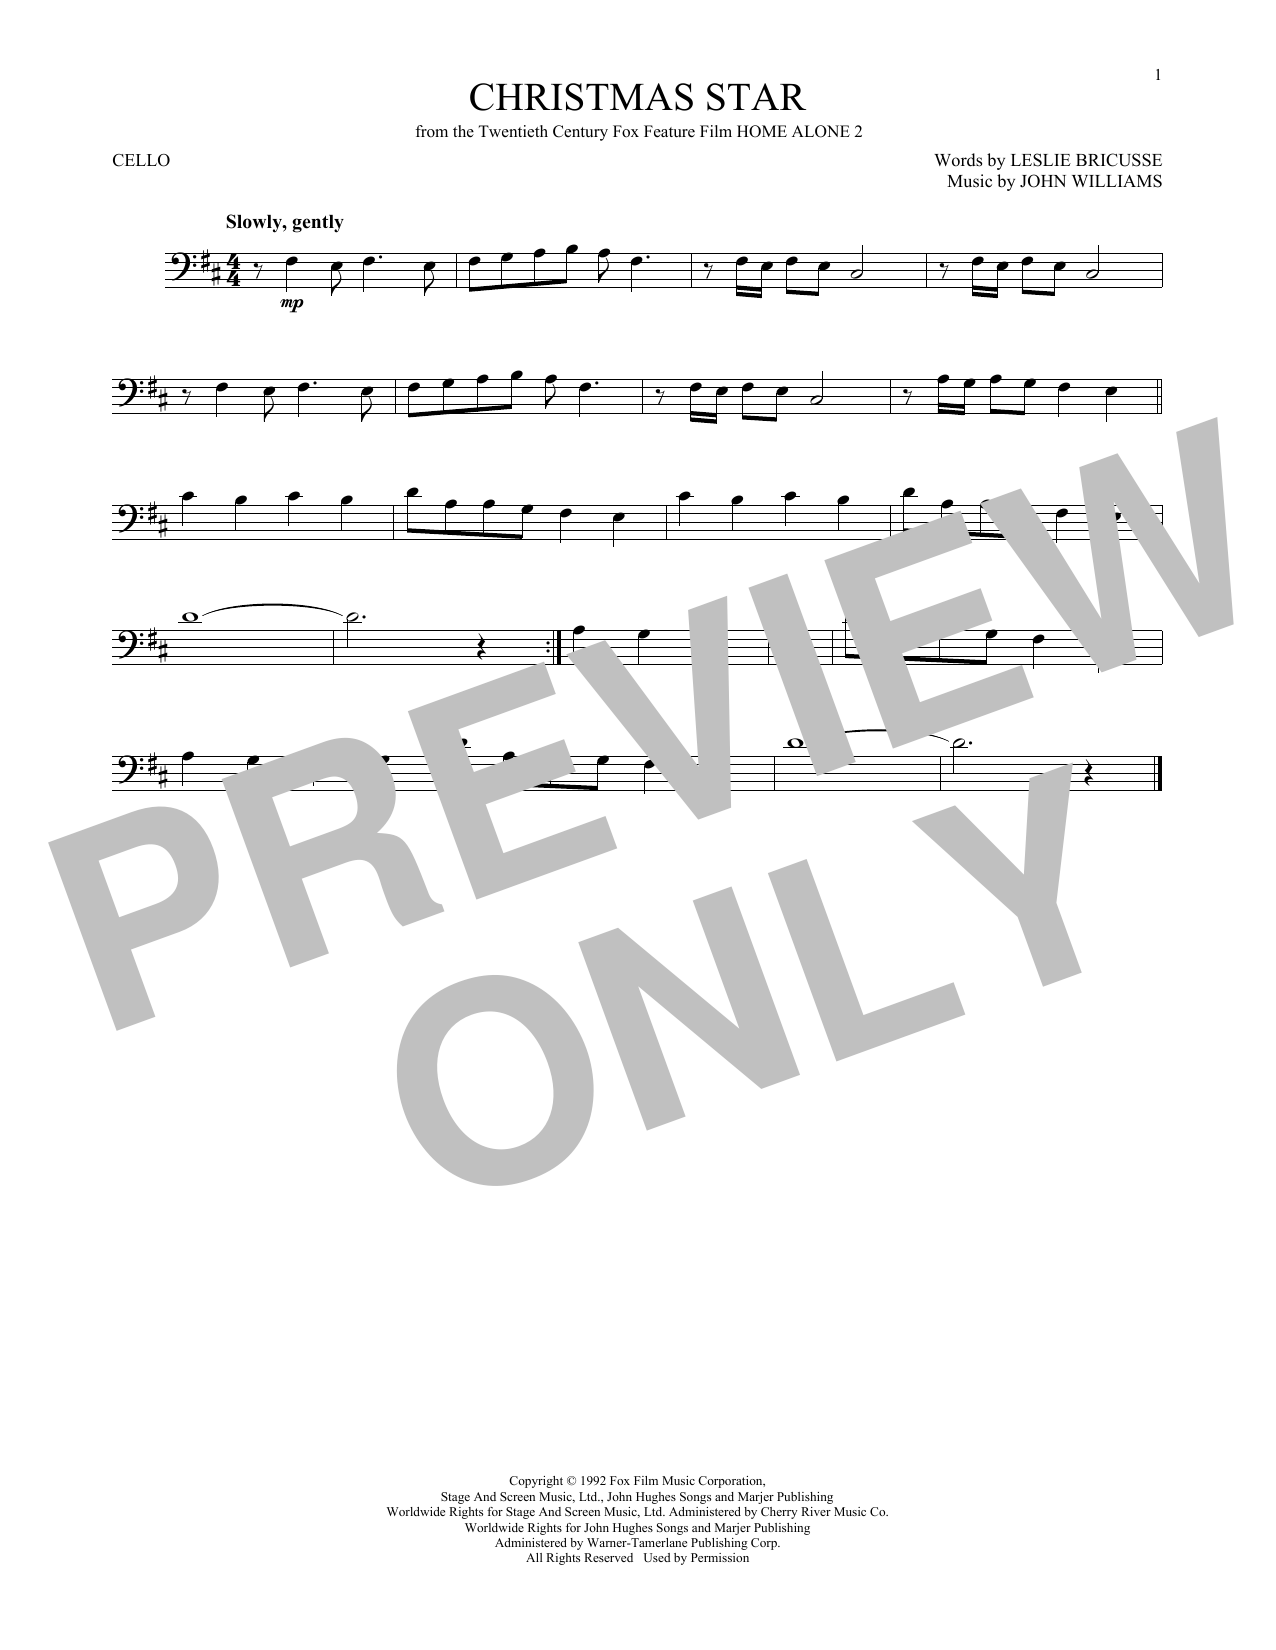 John Williams Christmas Star Sheet Music Notes & Chords for Trombone - Download or Print PDF